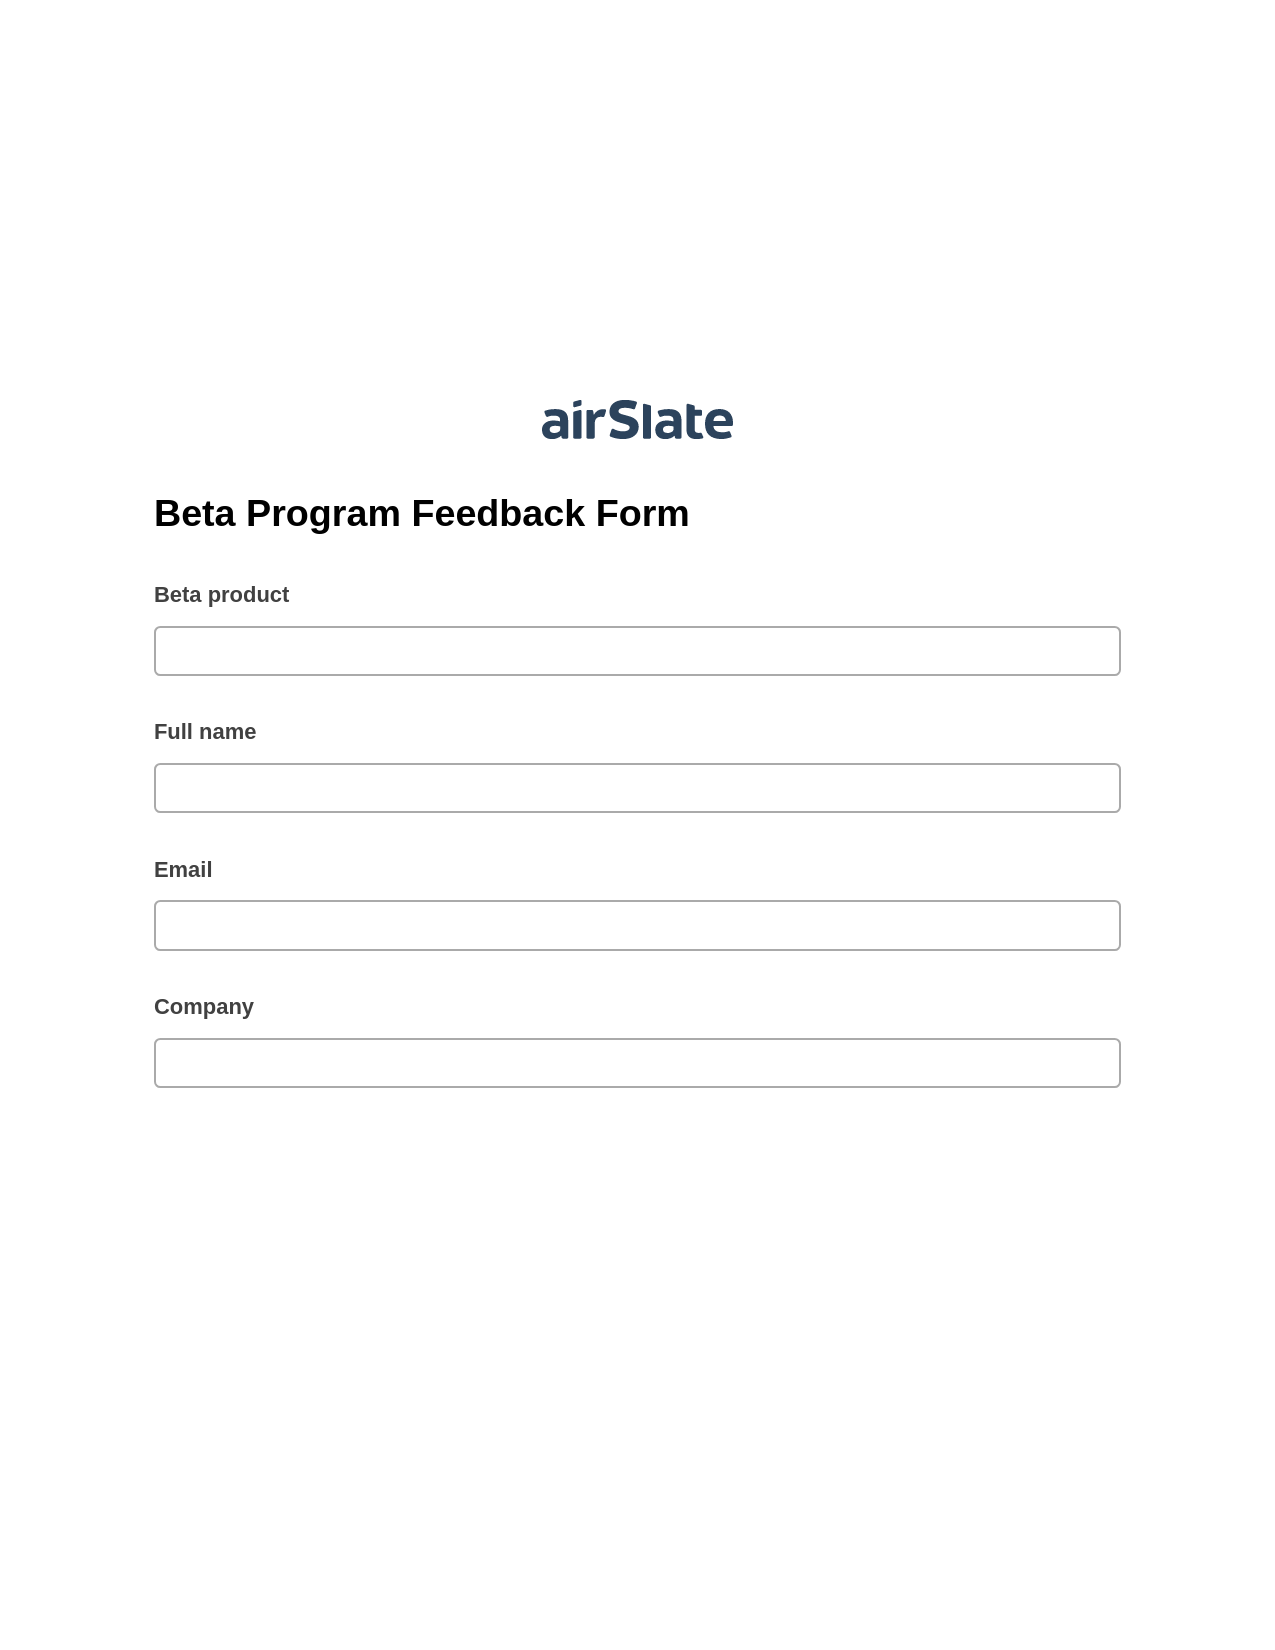 Multirole Beta Program Feedback Form Pre-fill Document Bot, Assign Slate Name Bot, Archive to SharePoint Folder Bot